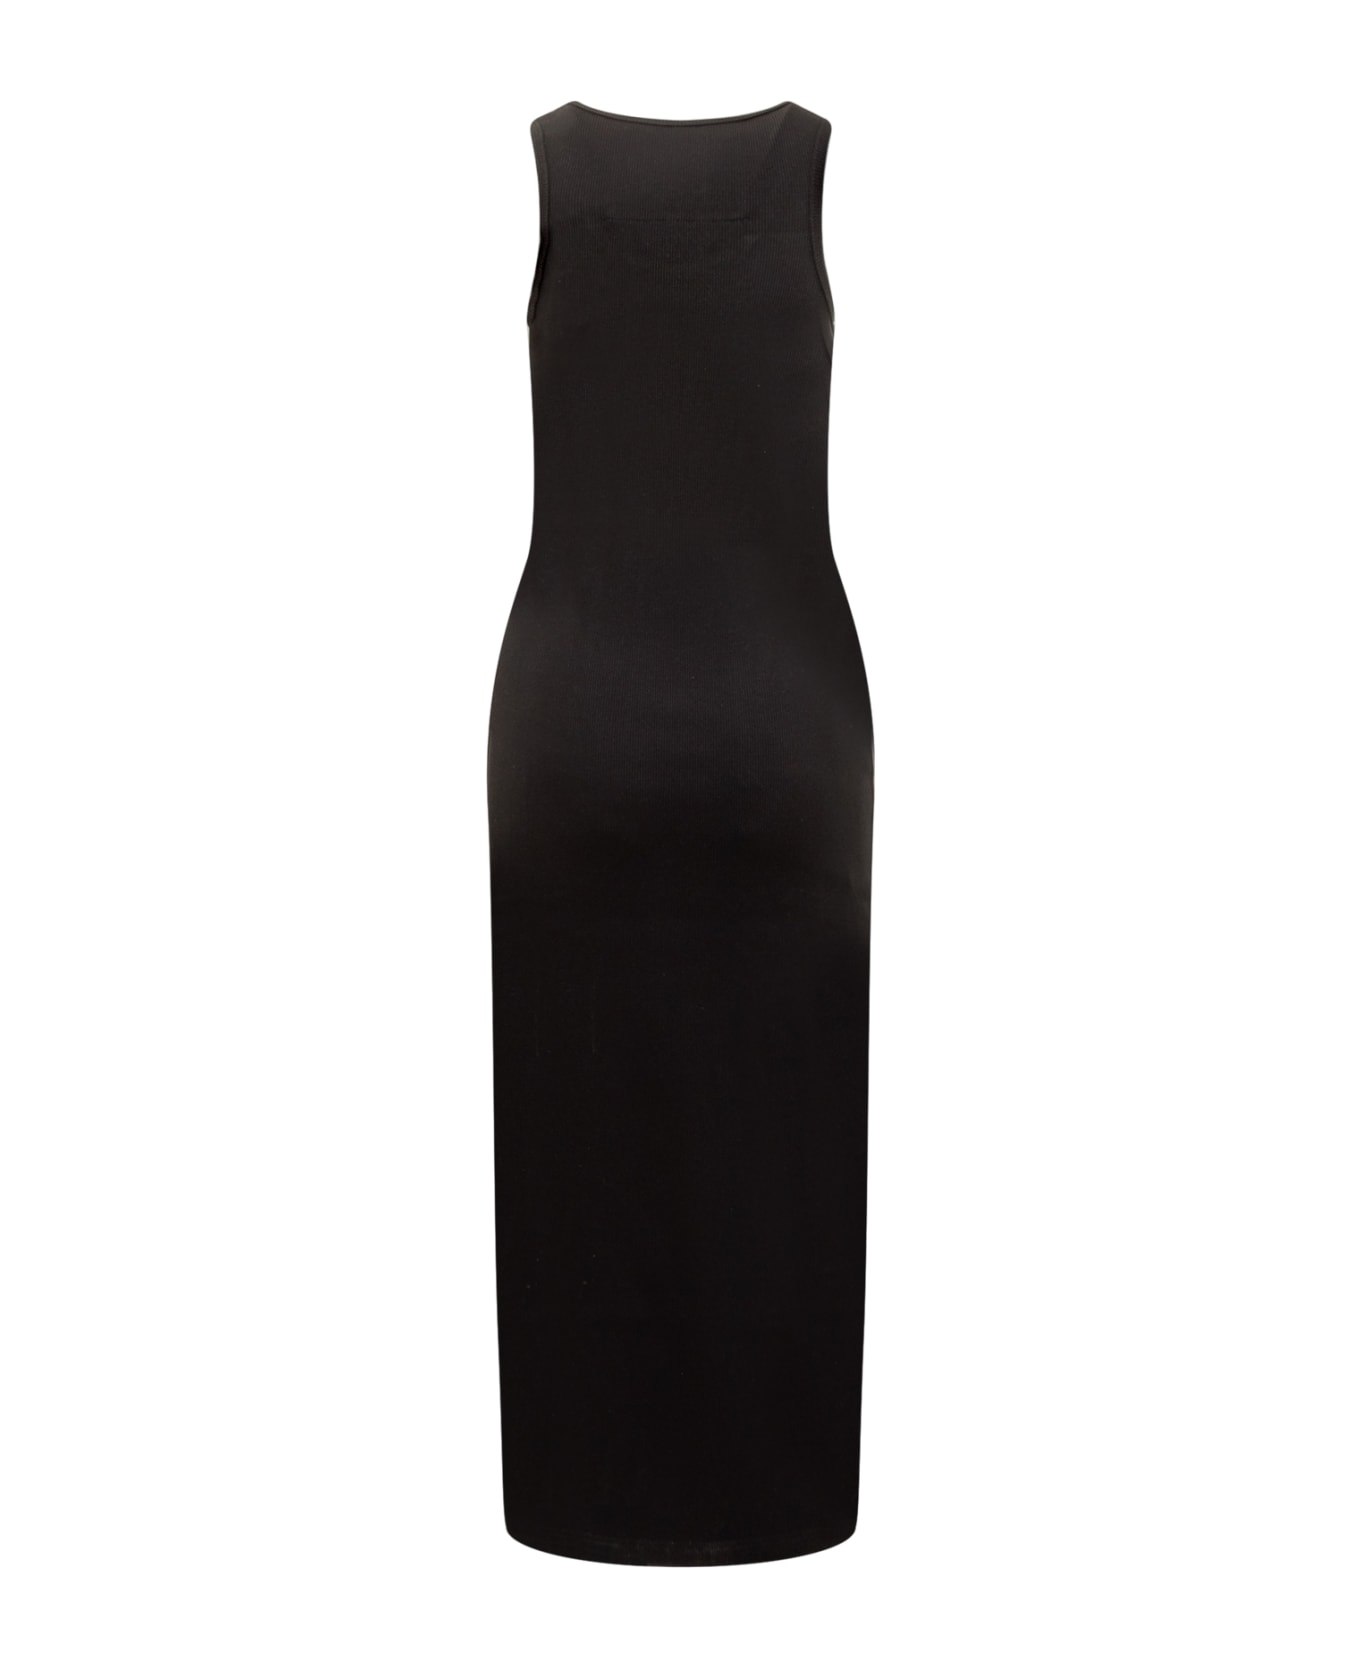 Givenchy Sheath Dress - black